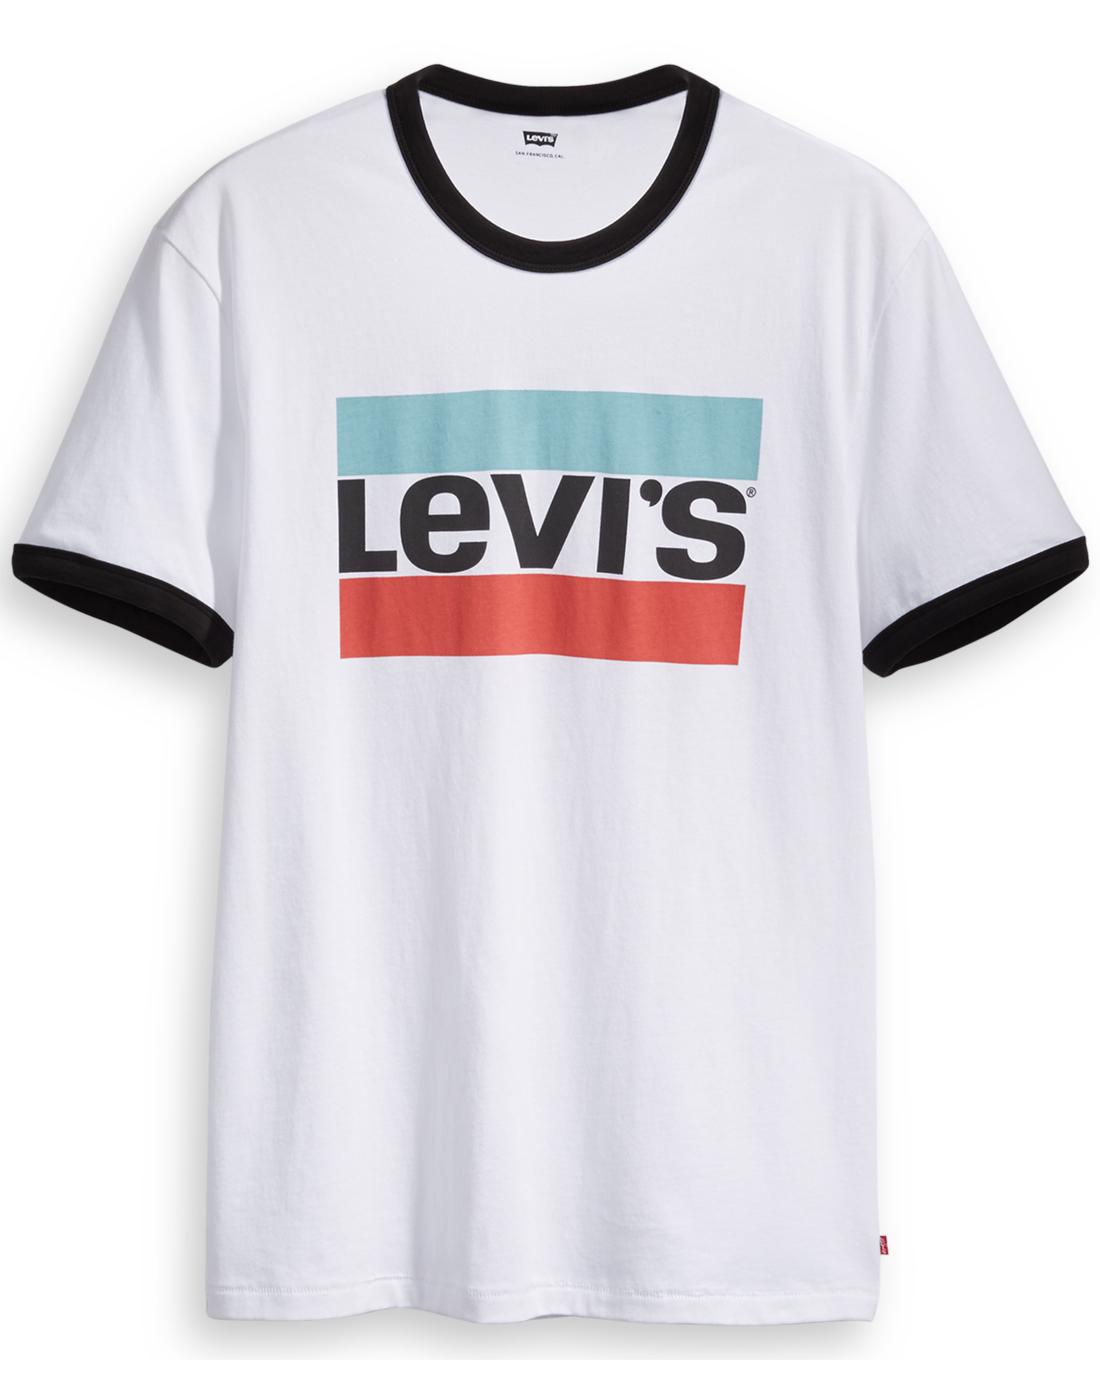 levis retro t shirt Cheaper Than Retail 